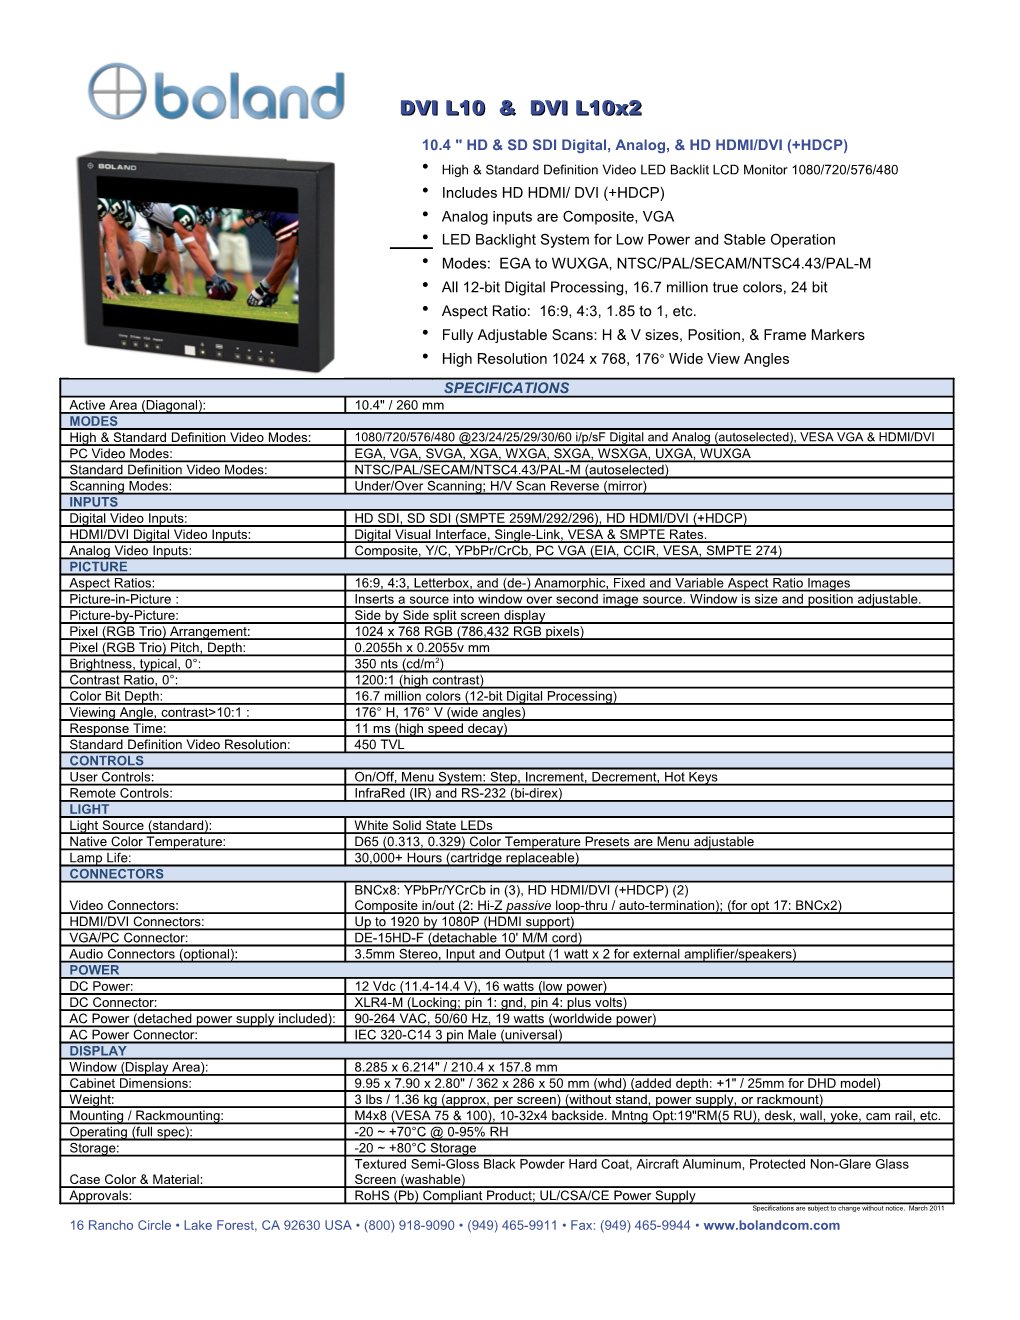 High & Standard Definition Video LED Backlit LCD Monitor 1080/720/576/480